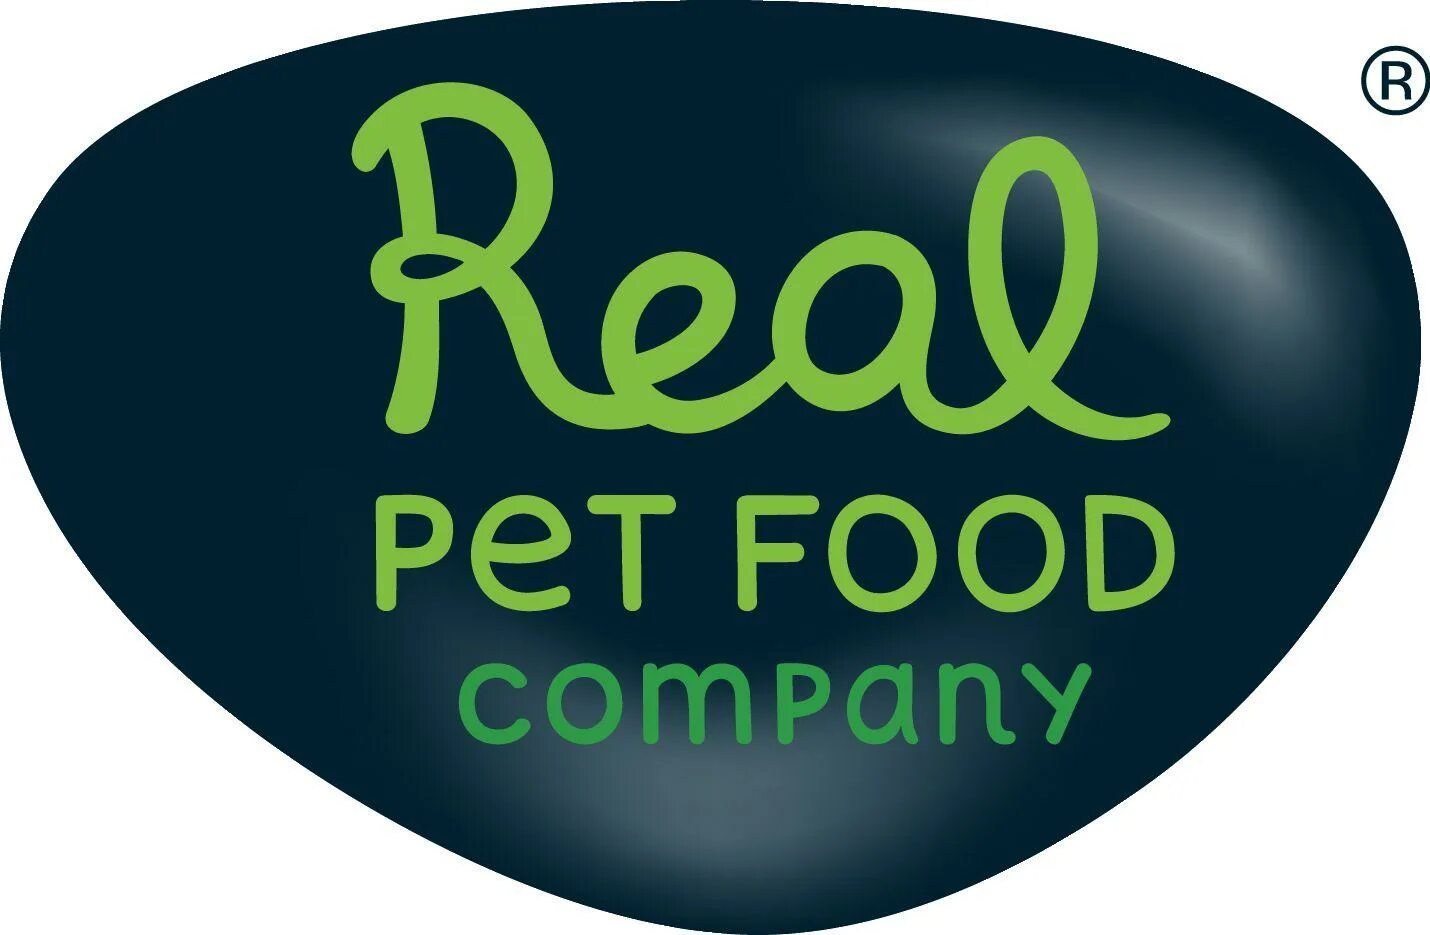 Food Company. Pets food Company. Логотип фуд Компани. Логотип еды для собак. Pets company